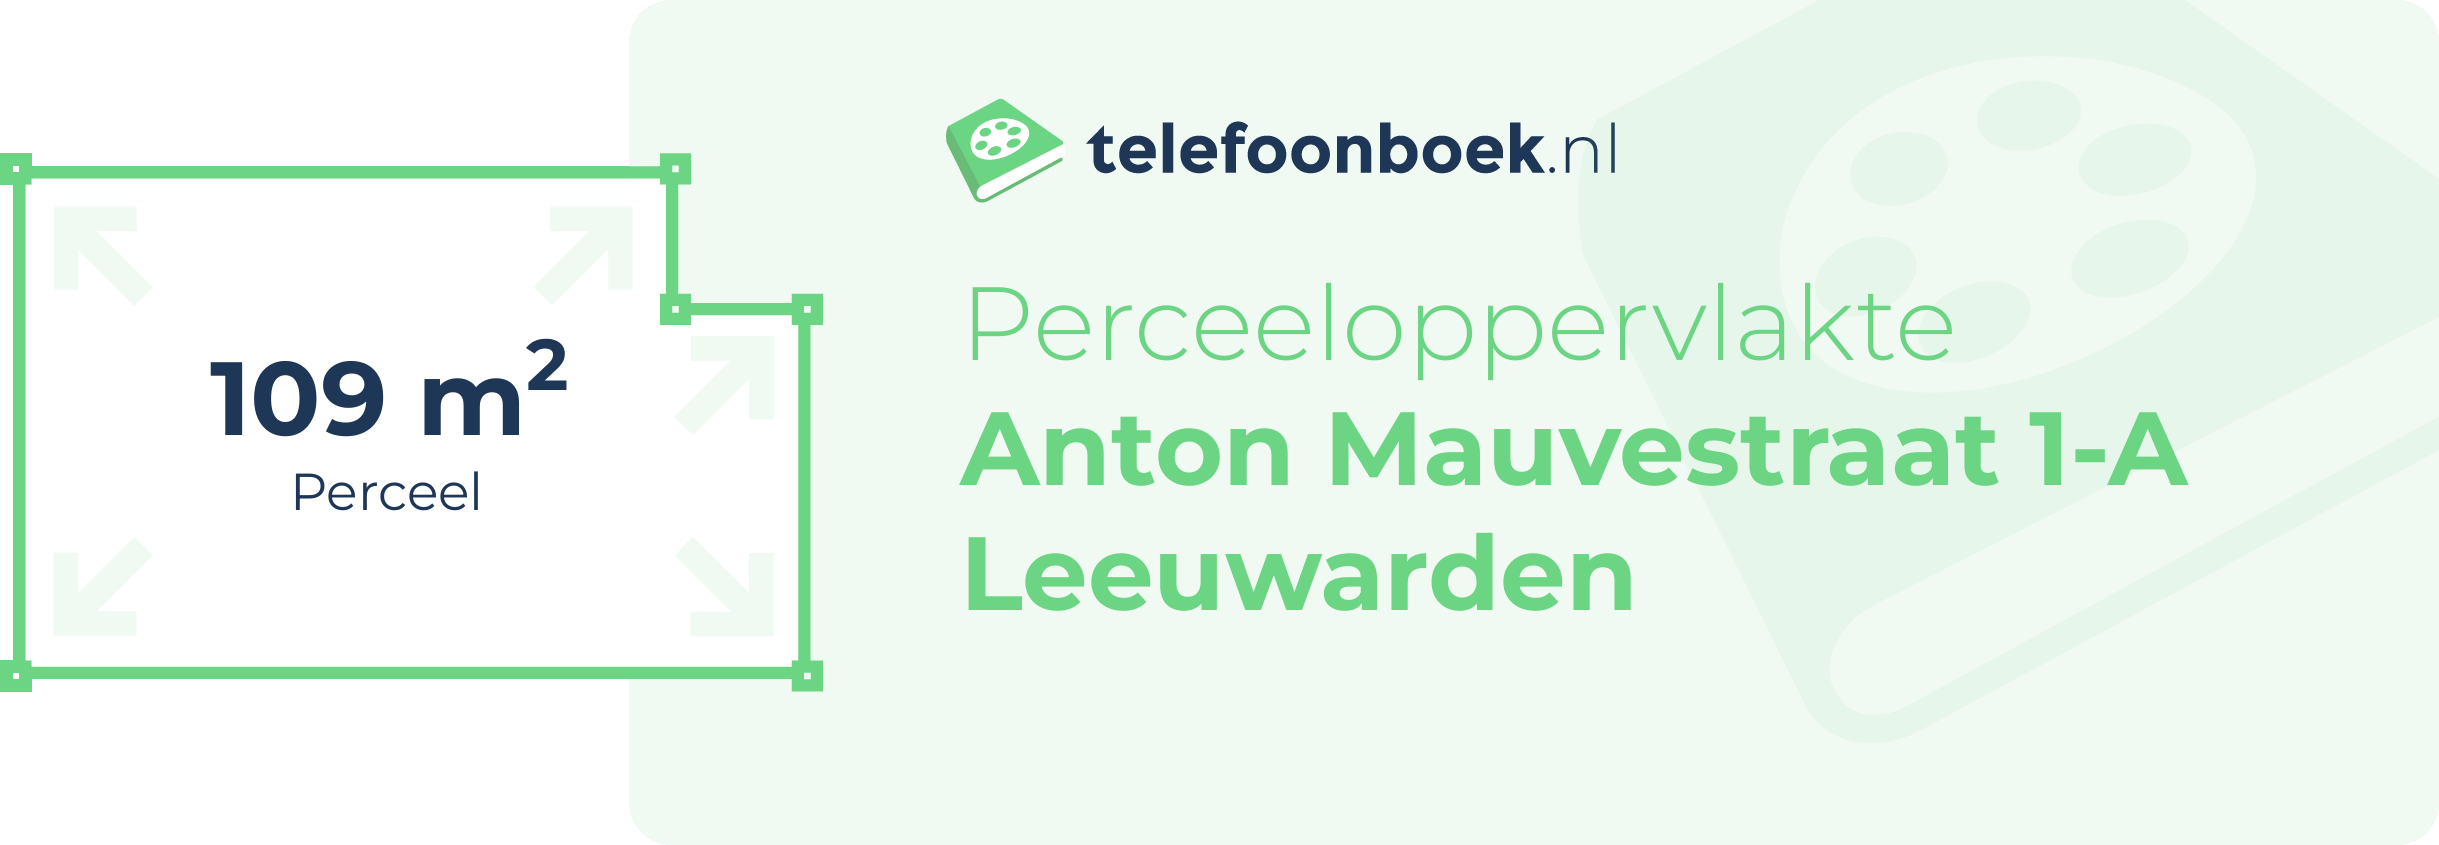 Perceeloppervlakte Anton Mauvestraat 1-A Leeuwarden